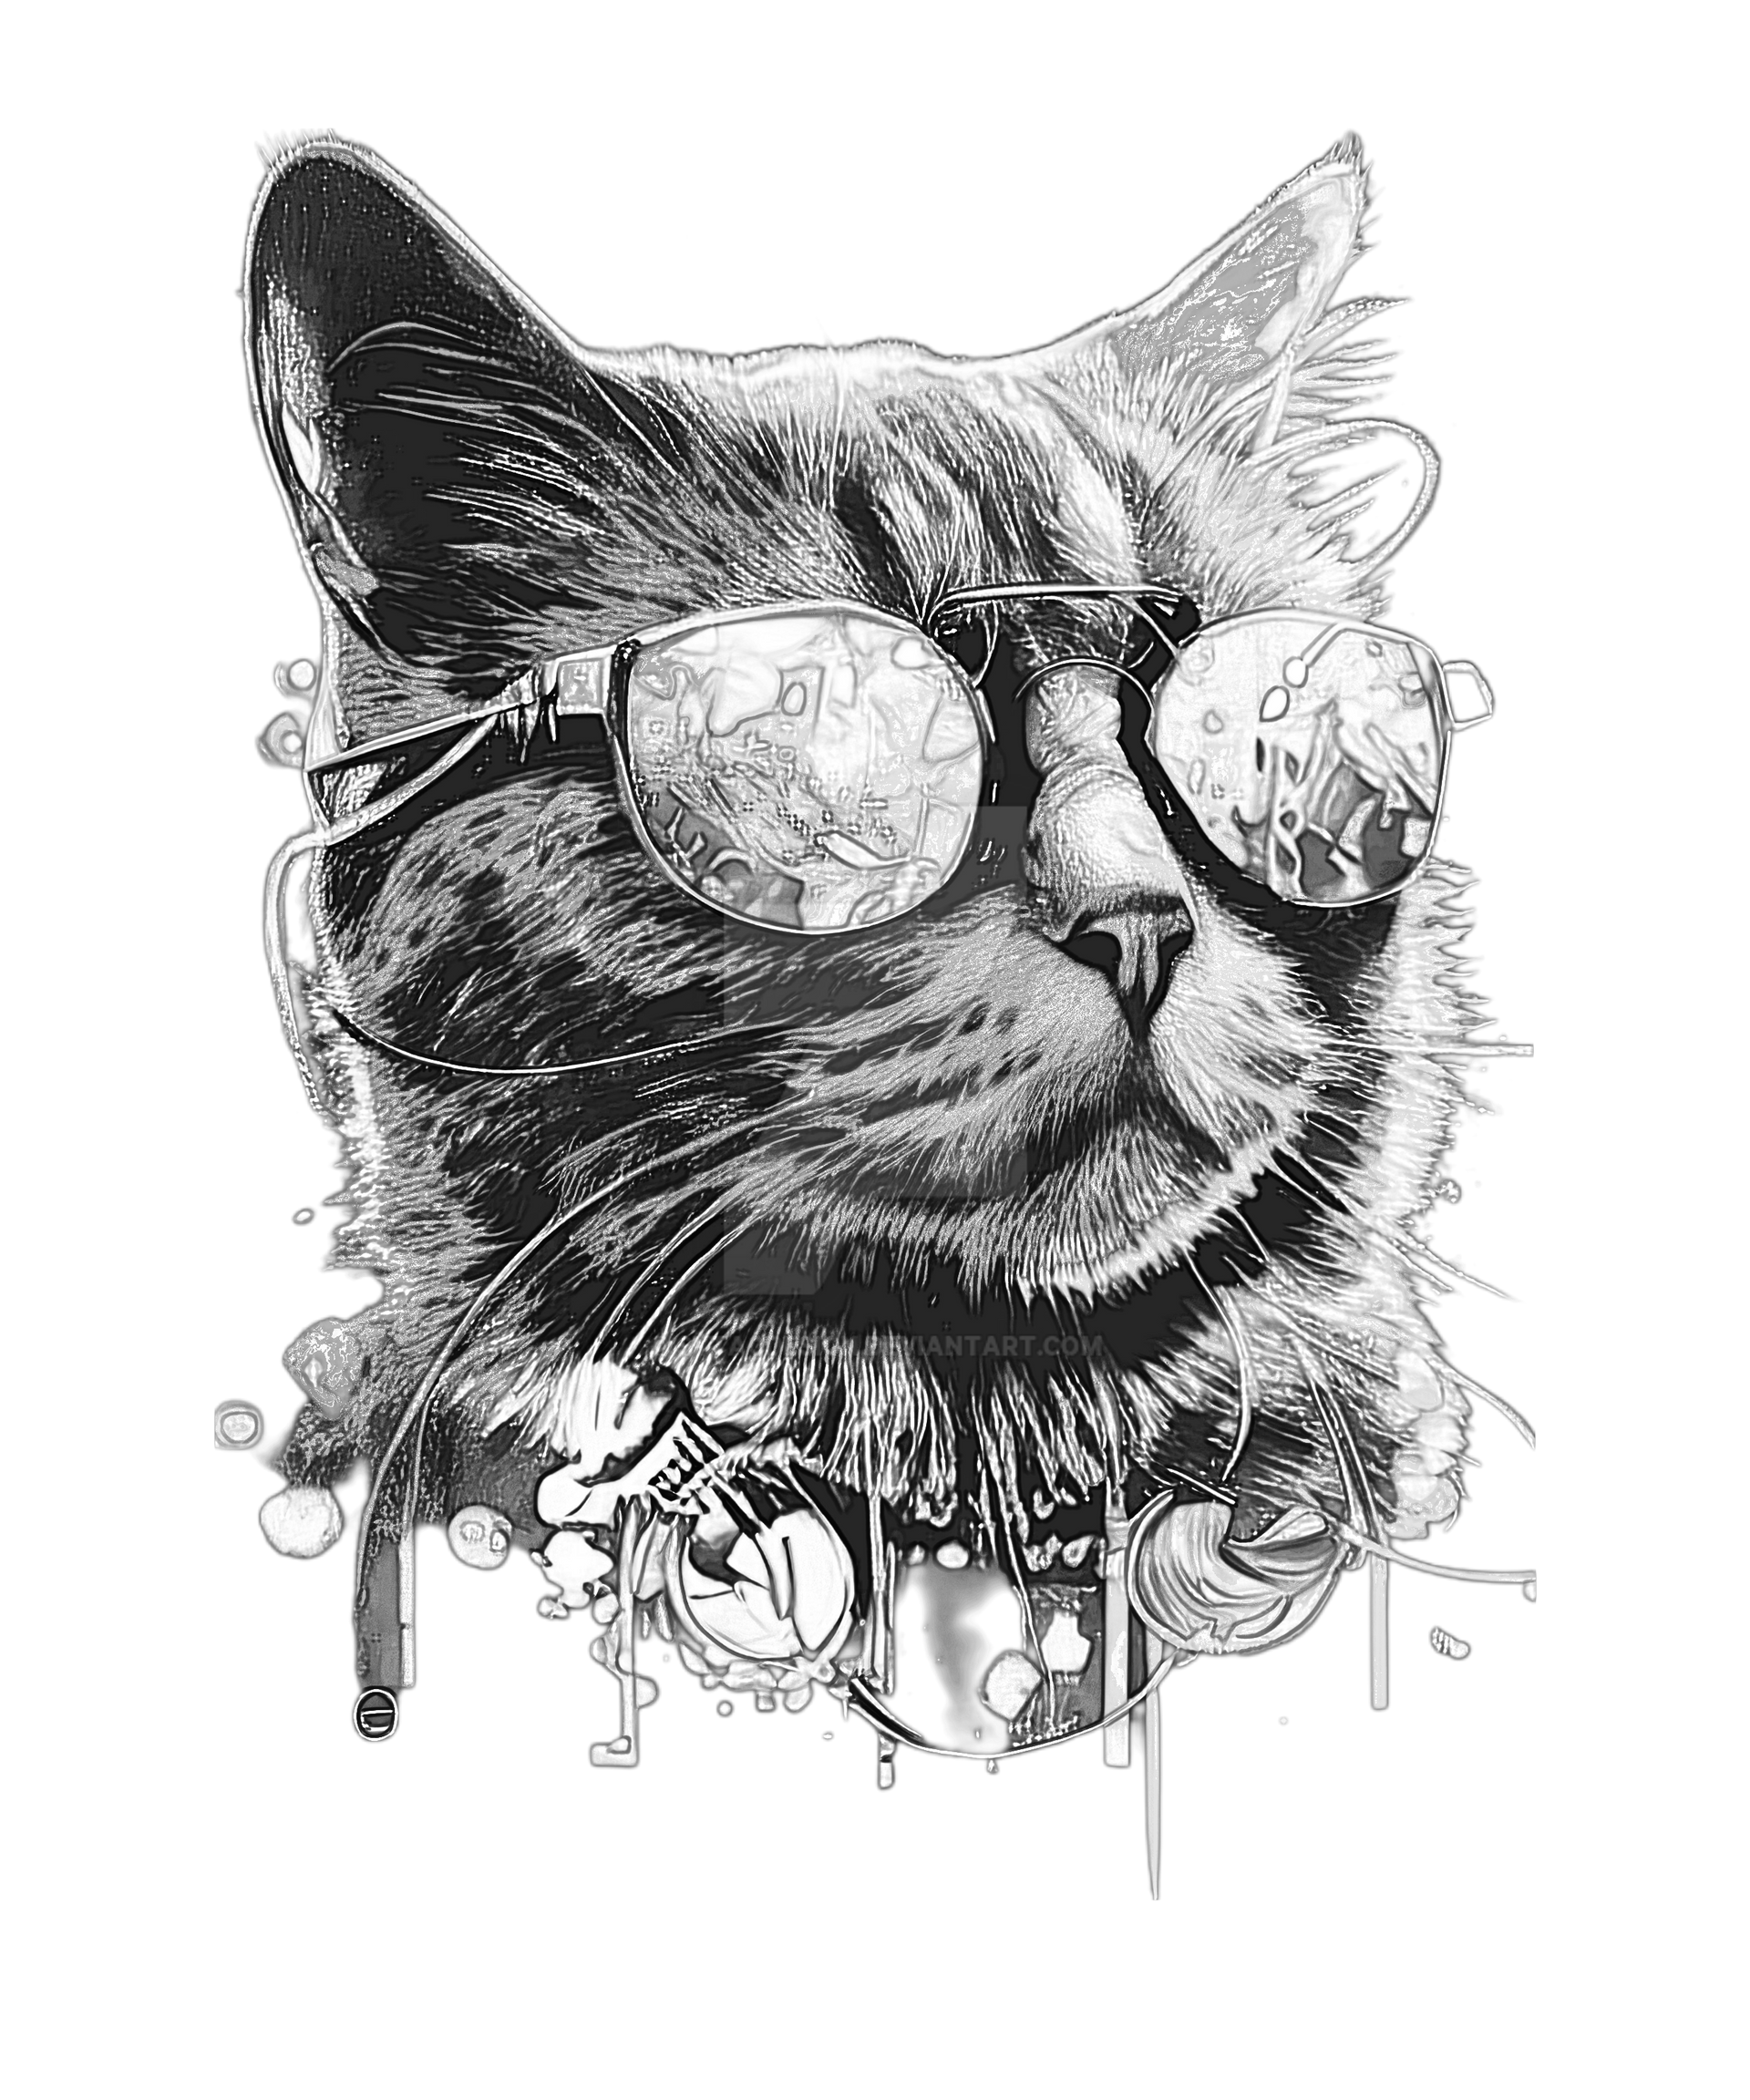 Cool Sunglasses Hip modern Kitty Cat by sytacdesign on DeviantArt